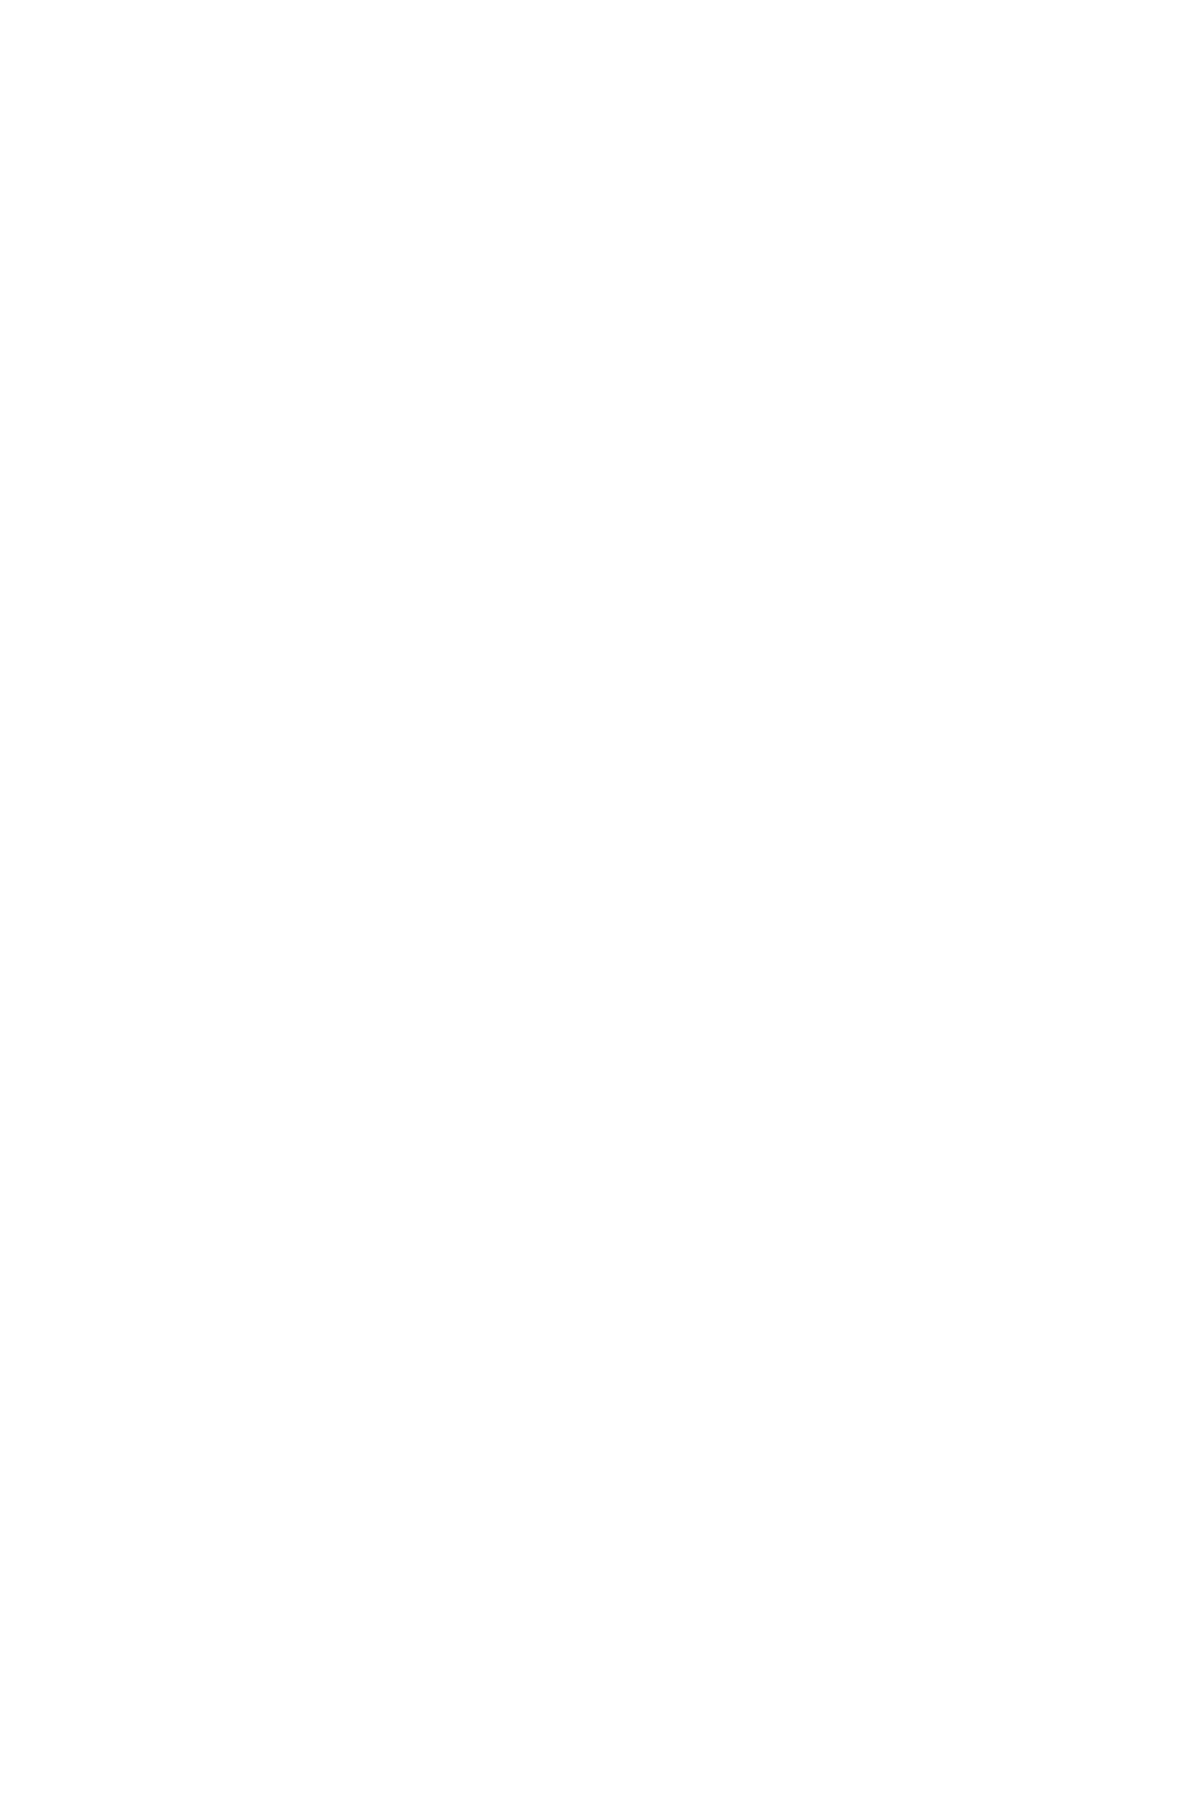 grace gardens logo